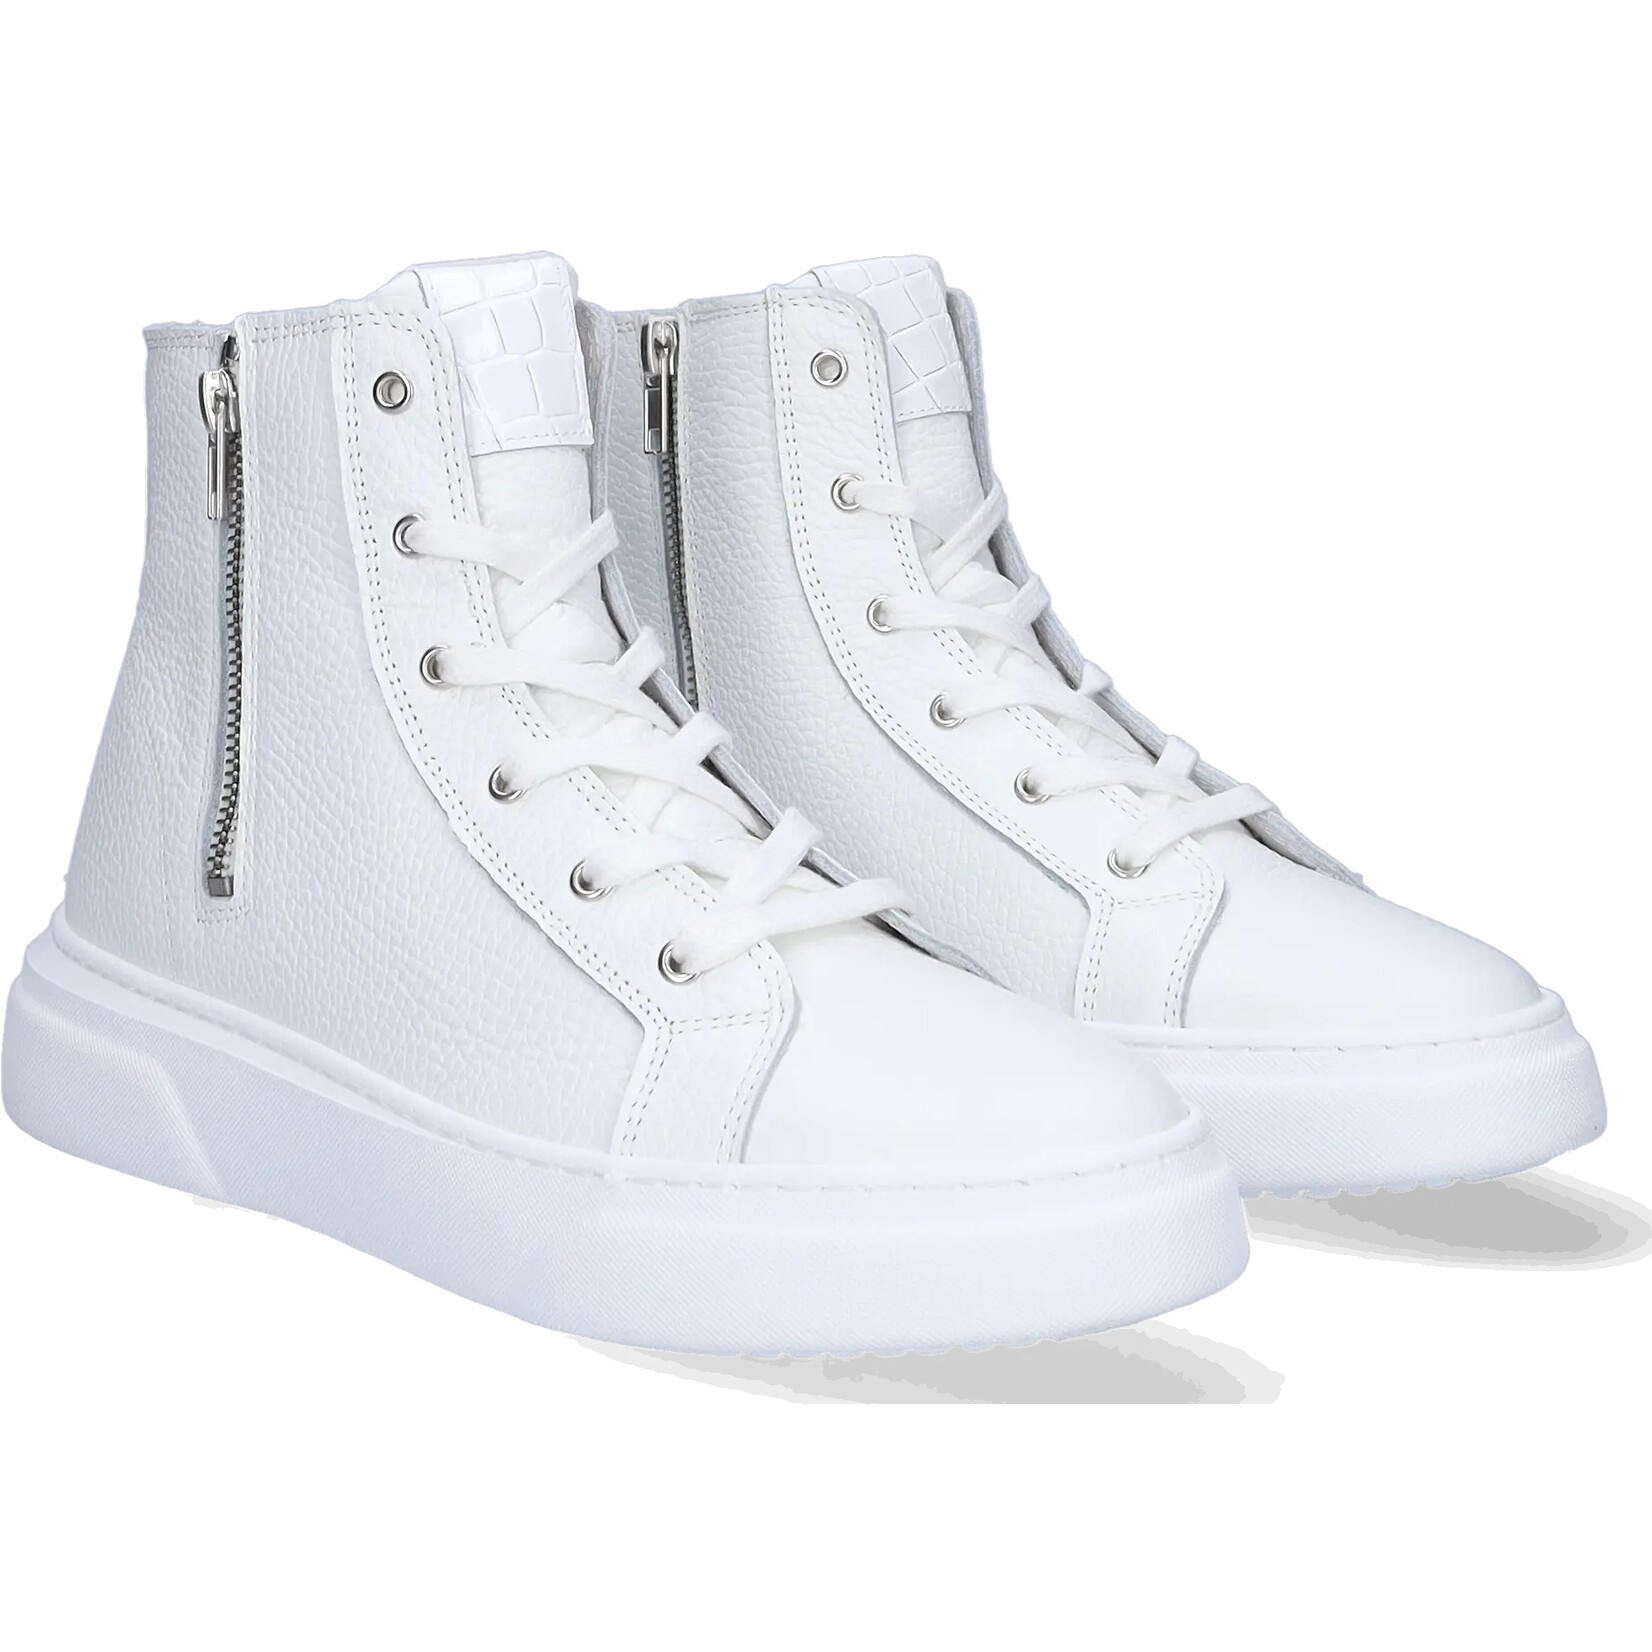 JJ Footwear La Paz - White